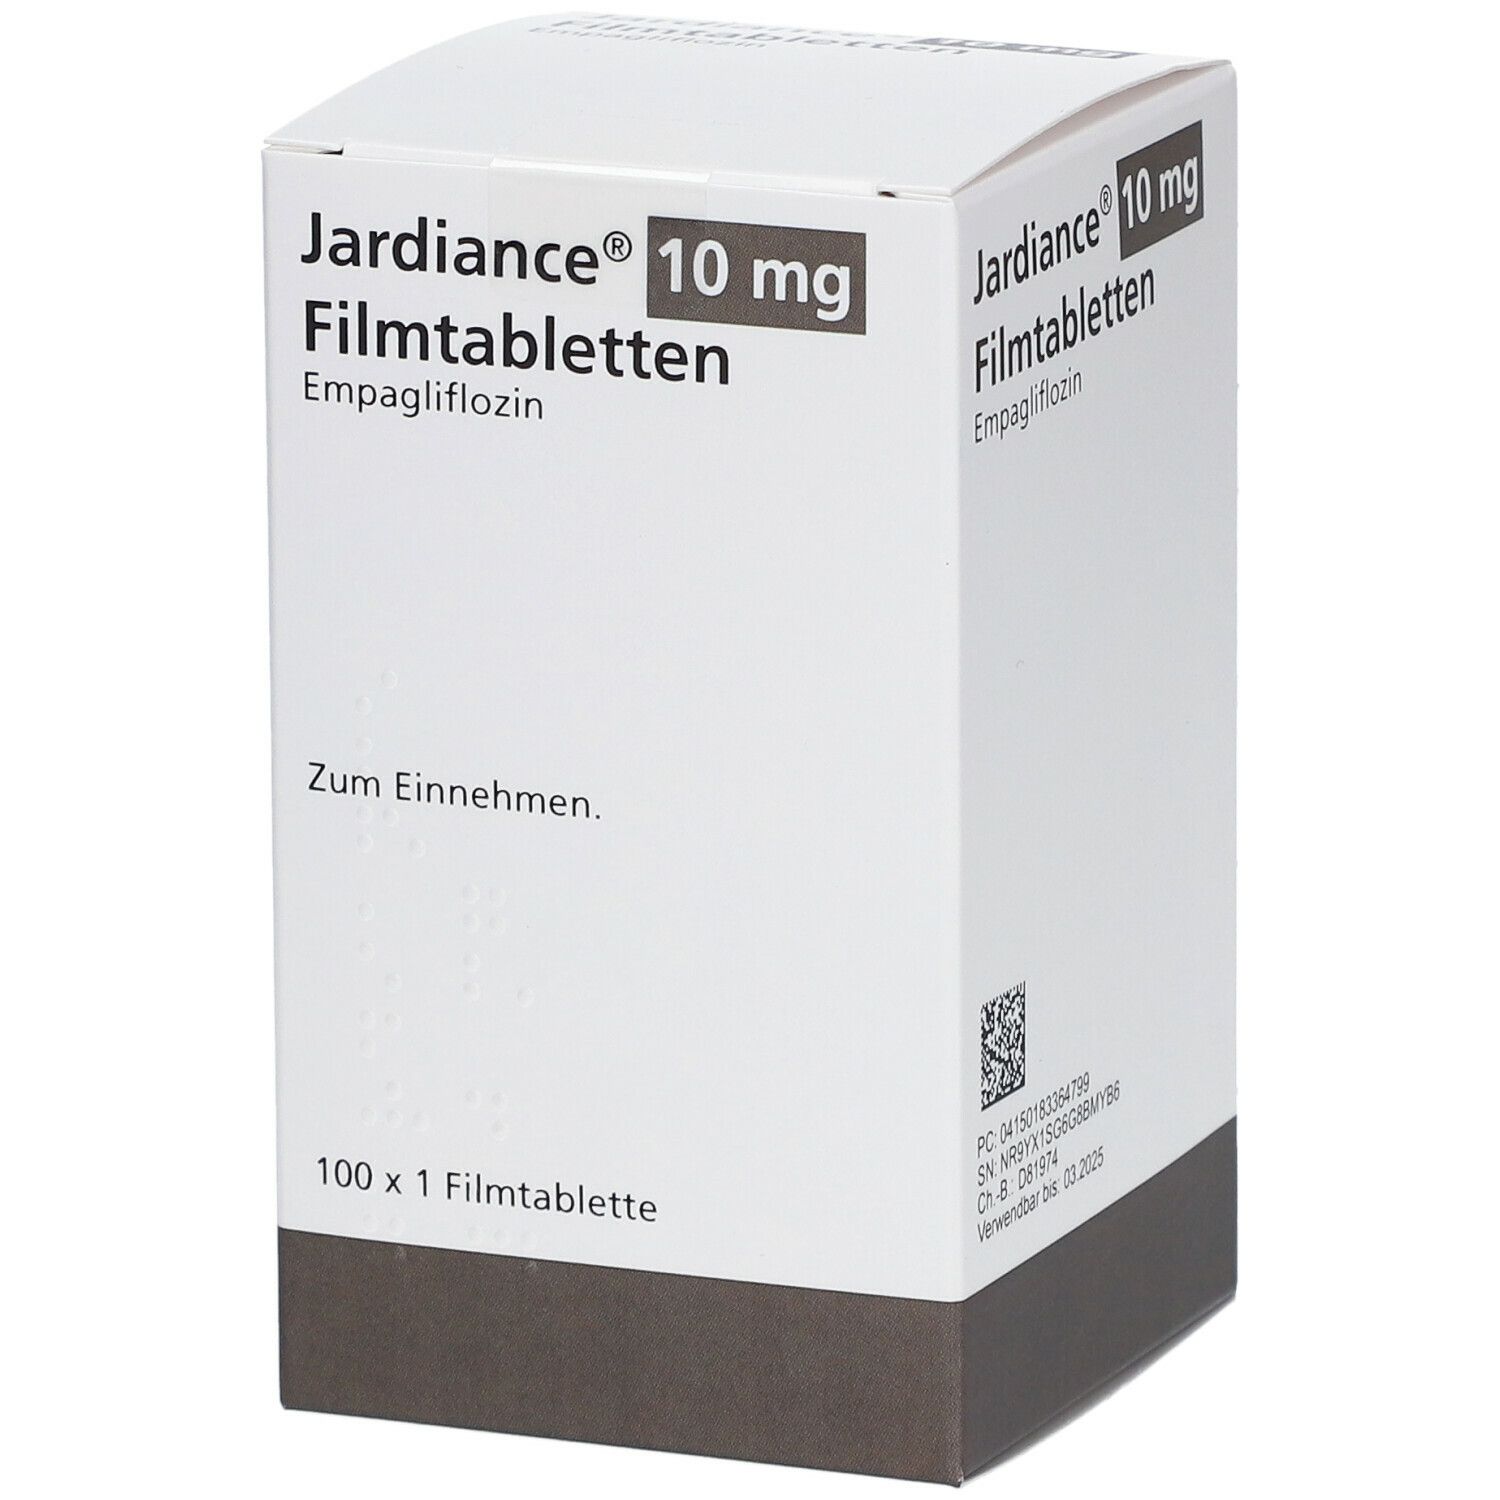 JARDIANCE 10 mg Filmtabletten 100 St mit dem E-Rezept kaufen - SHOP